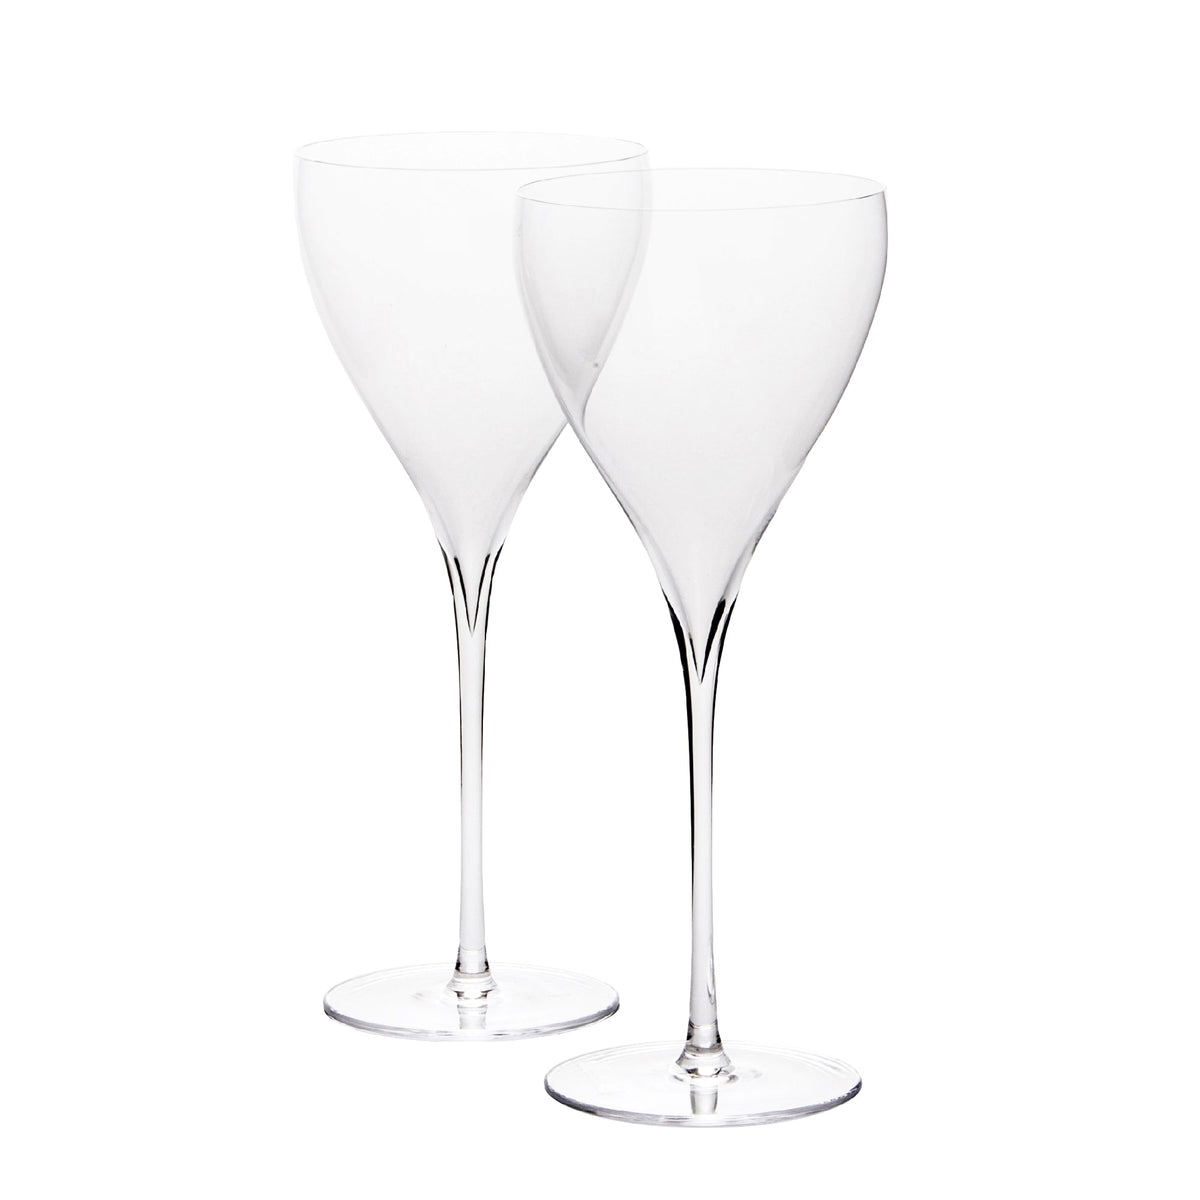 Savoy White Wine Glasses 12oz, Set of 2